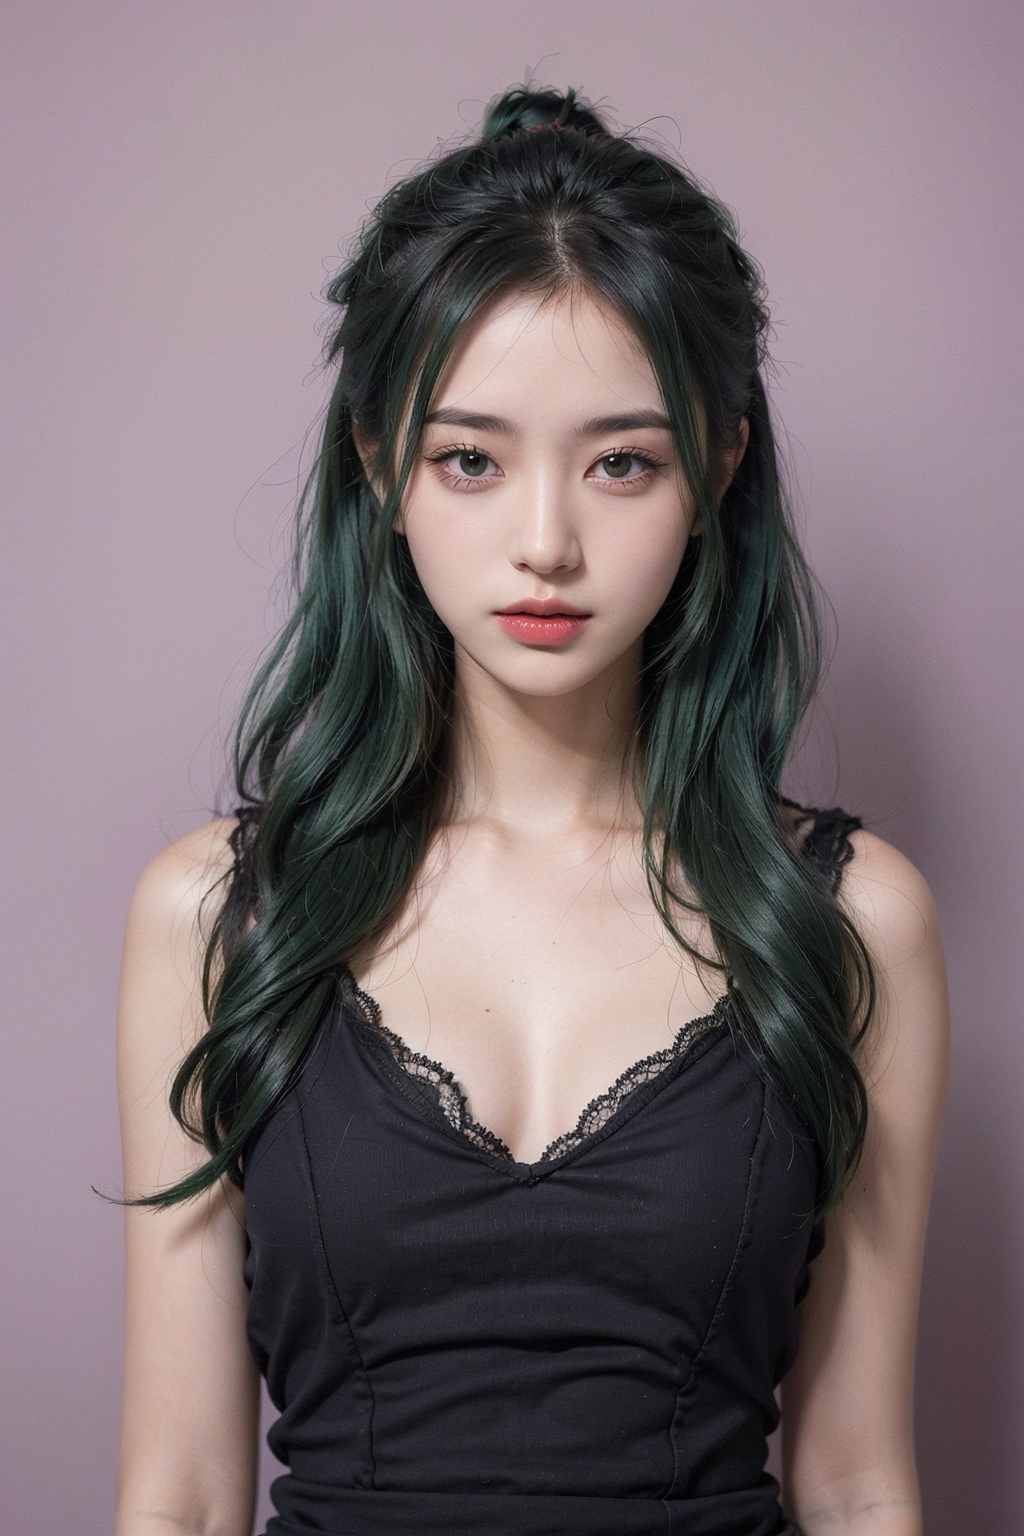 21yo girl, green hair, 
purple background,